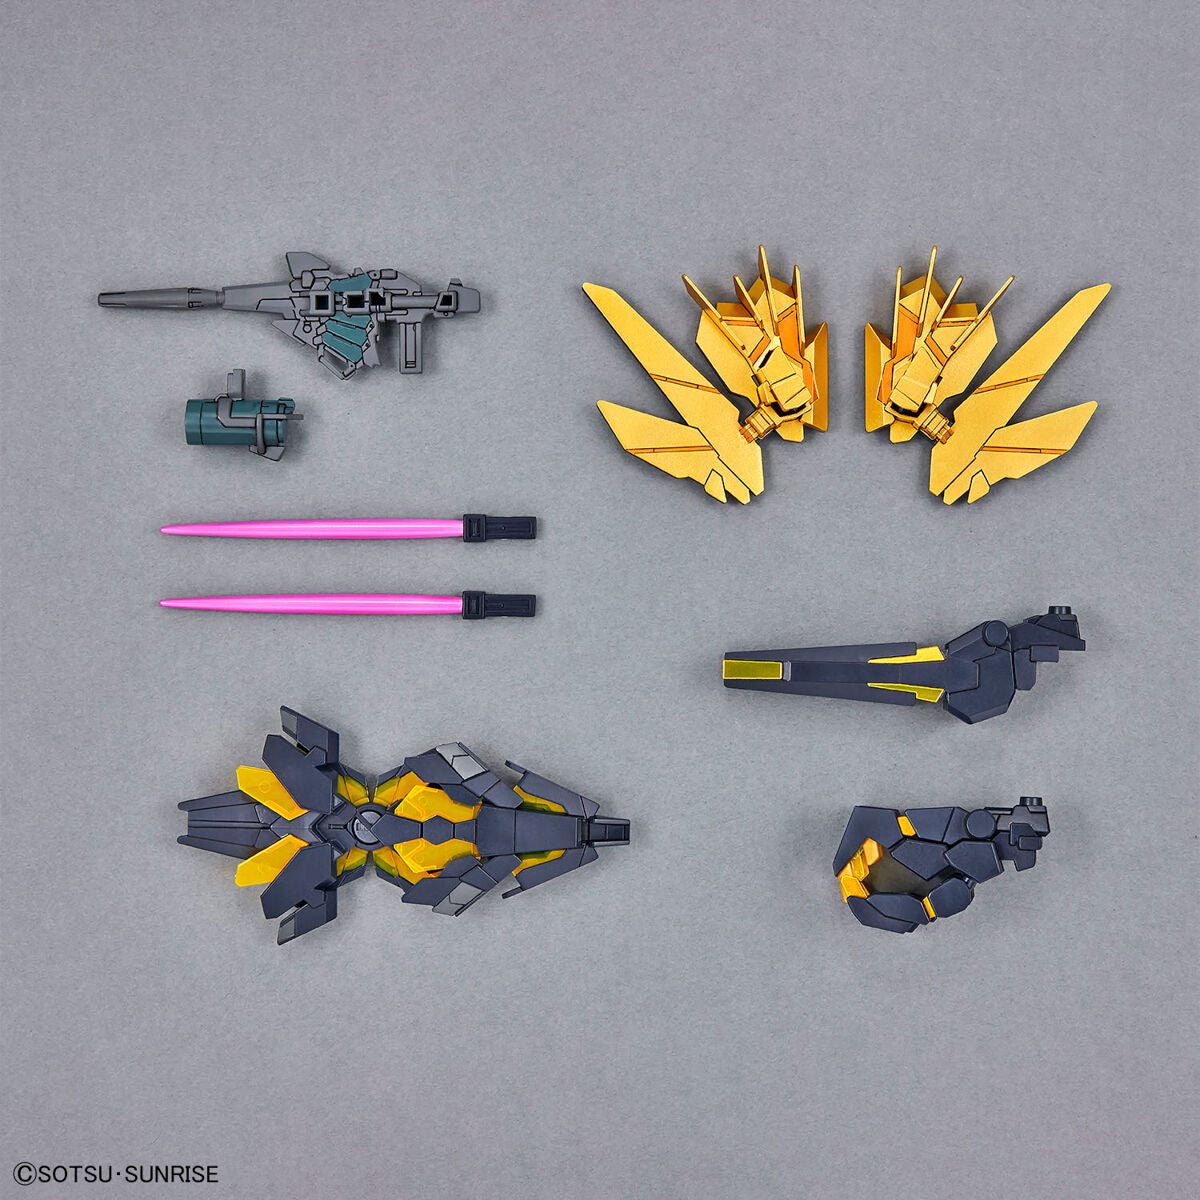 SD Gundam Cross Silhouette Unicorn Gundam 02 Banshee (Destroy Mode) & Banshee Norn Parts Set